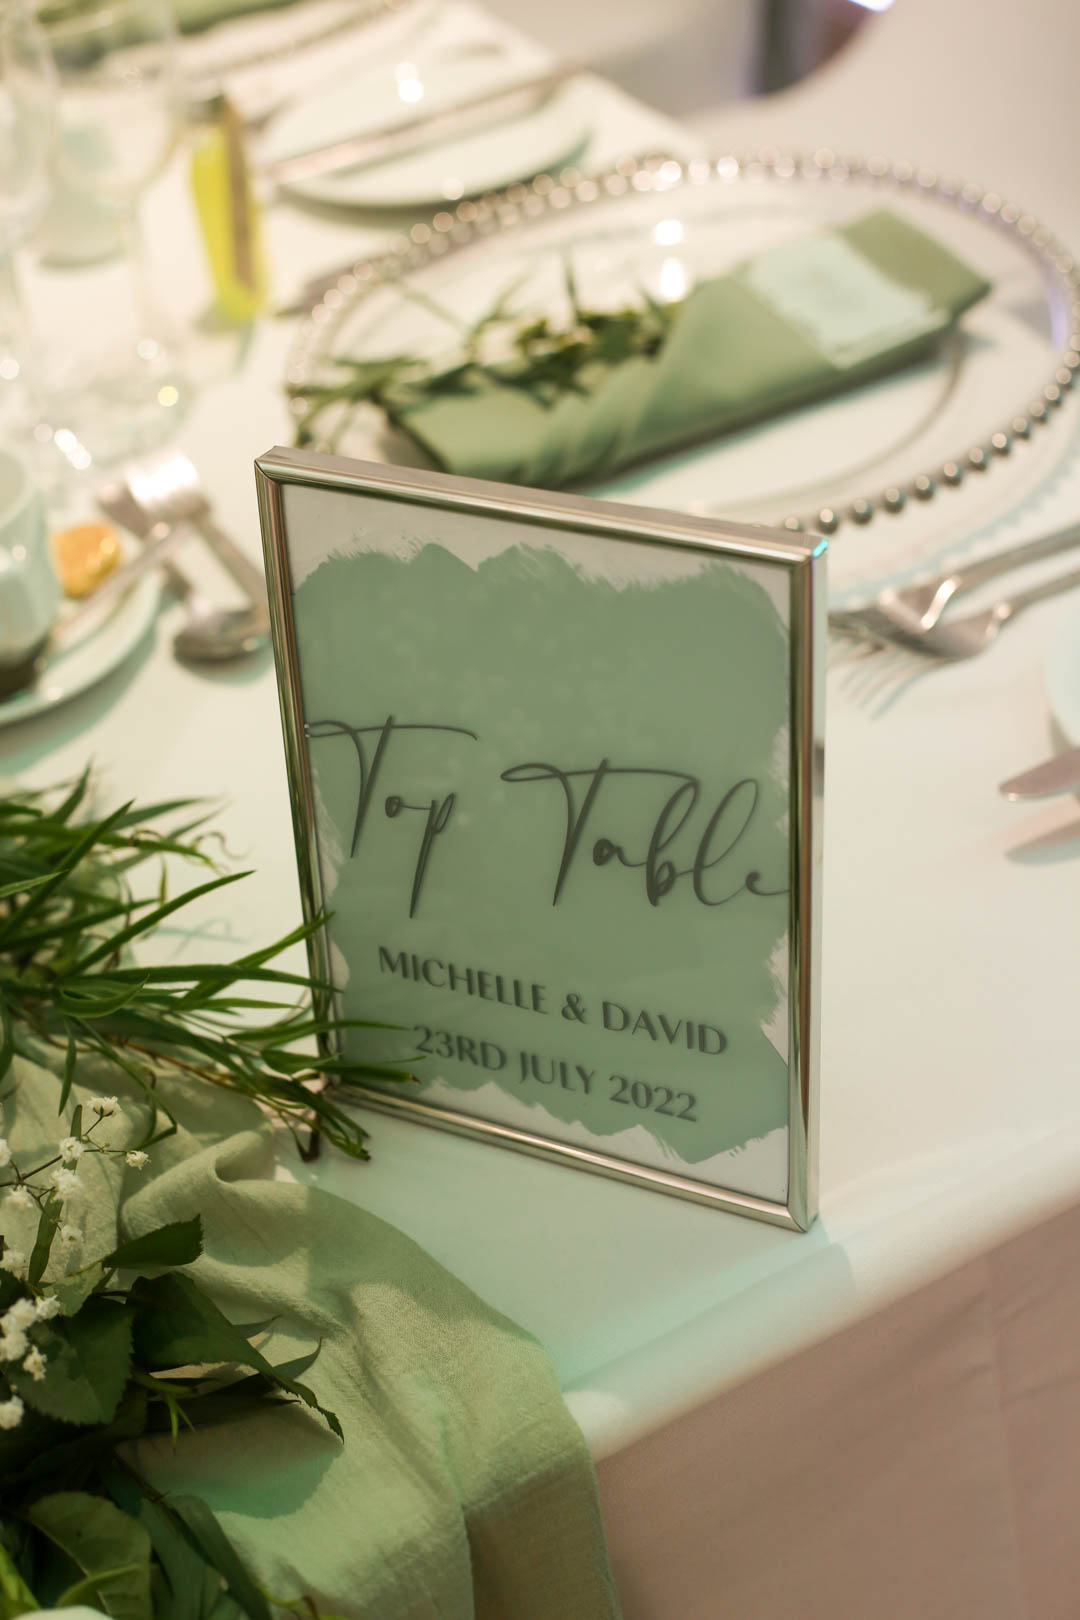 Mr & Mrs Barwell Wedding at Greetham Valley - 23.07.22 | weddings northa gallery image 7